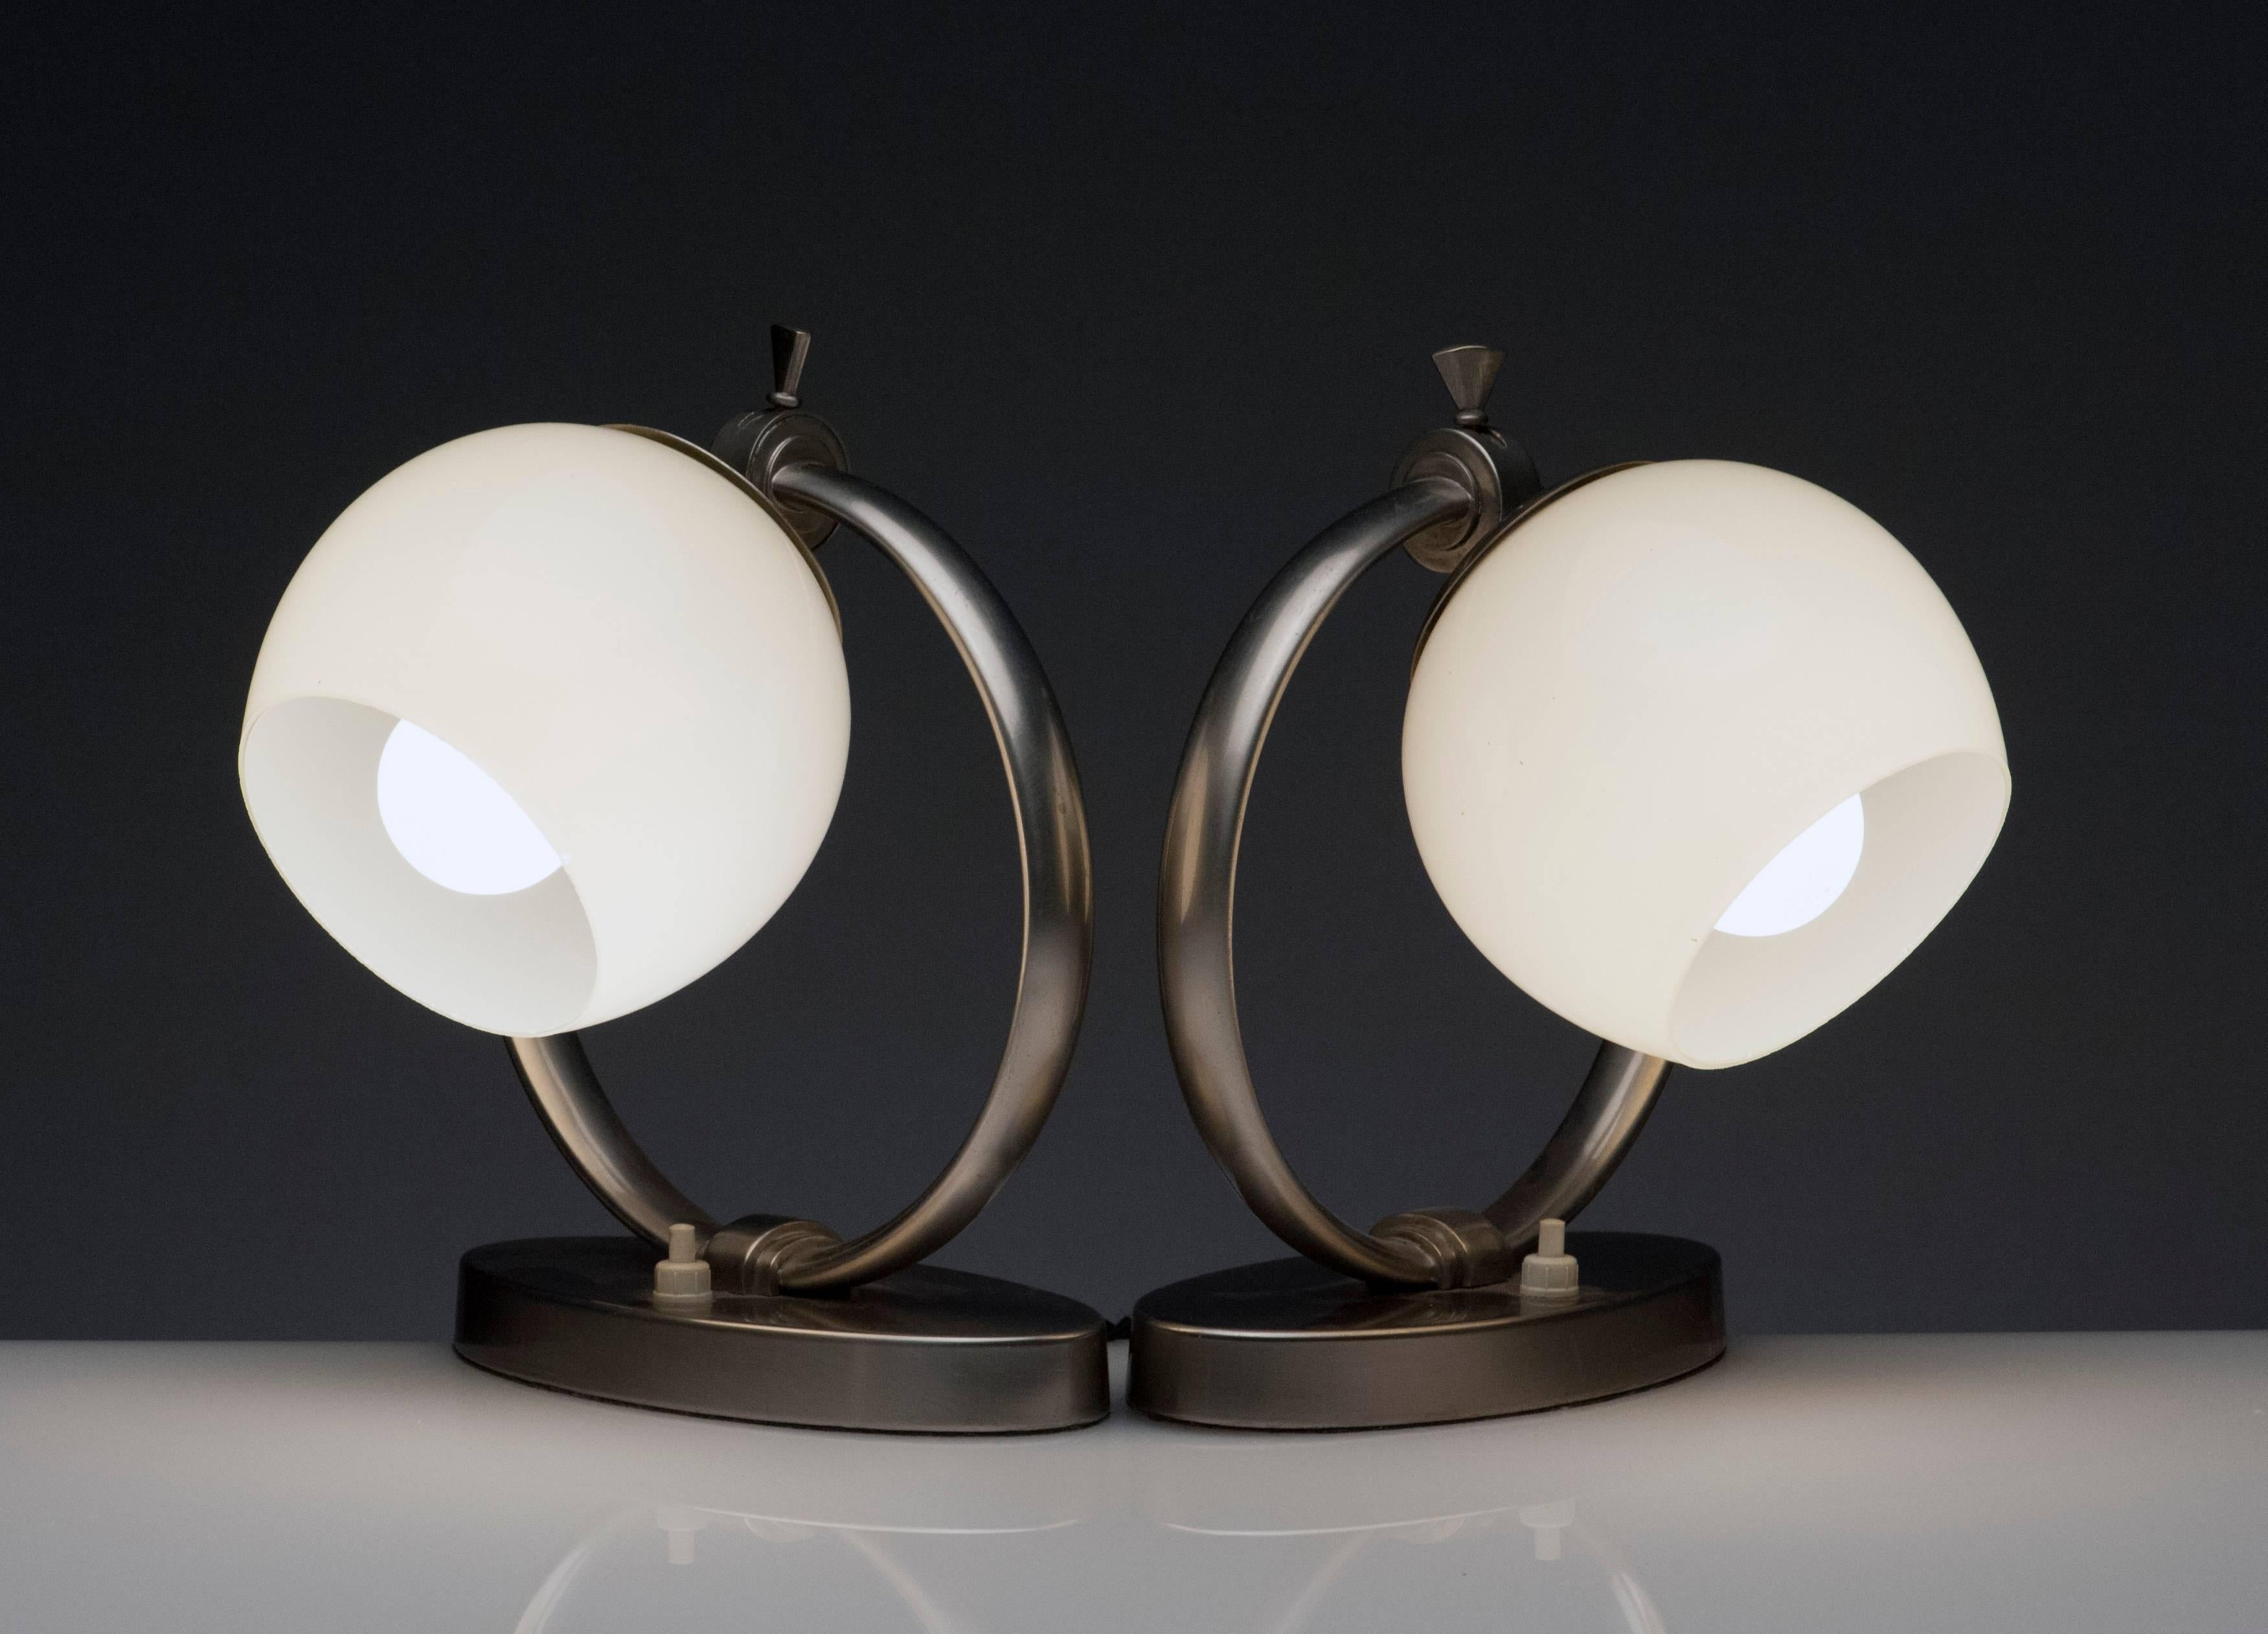 Vintage Modern Bauhaus Pair of Desk Lamps by WMF 1